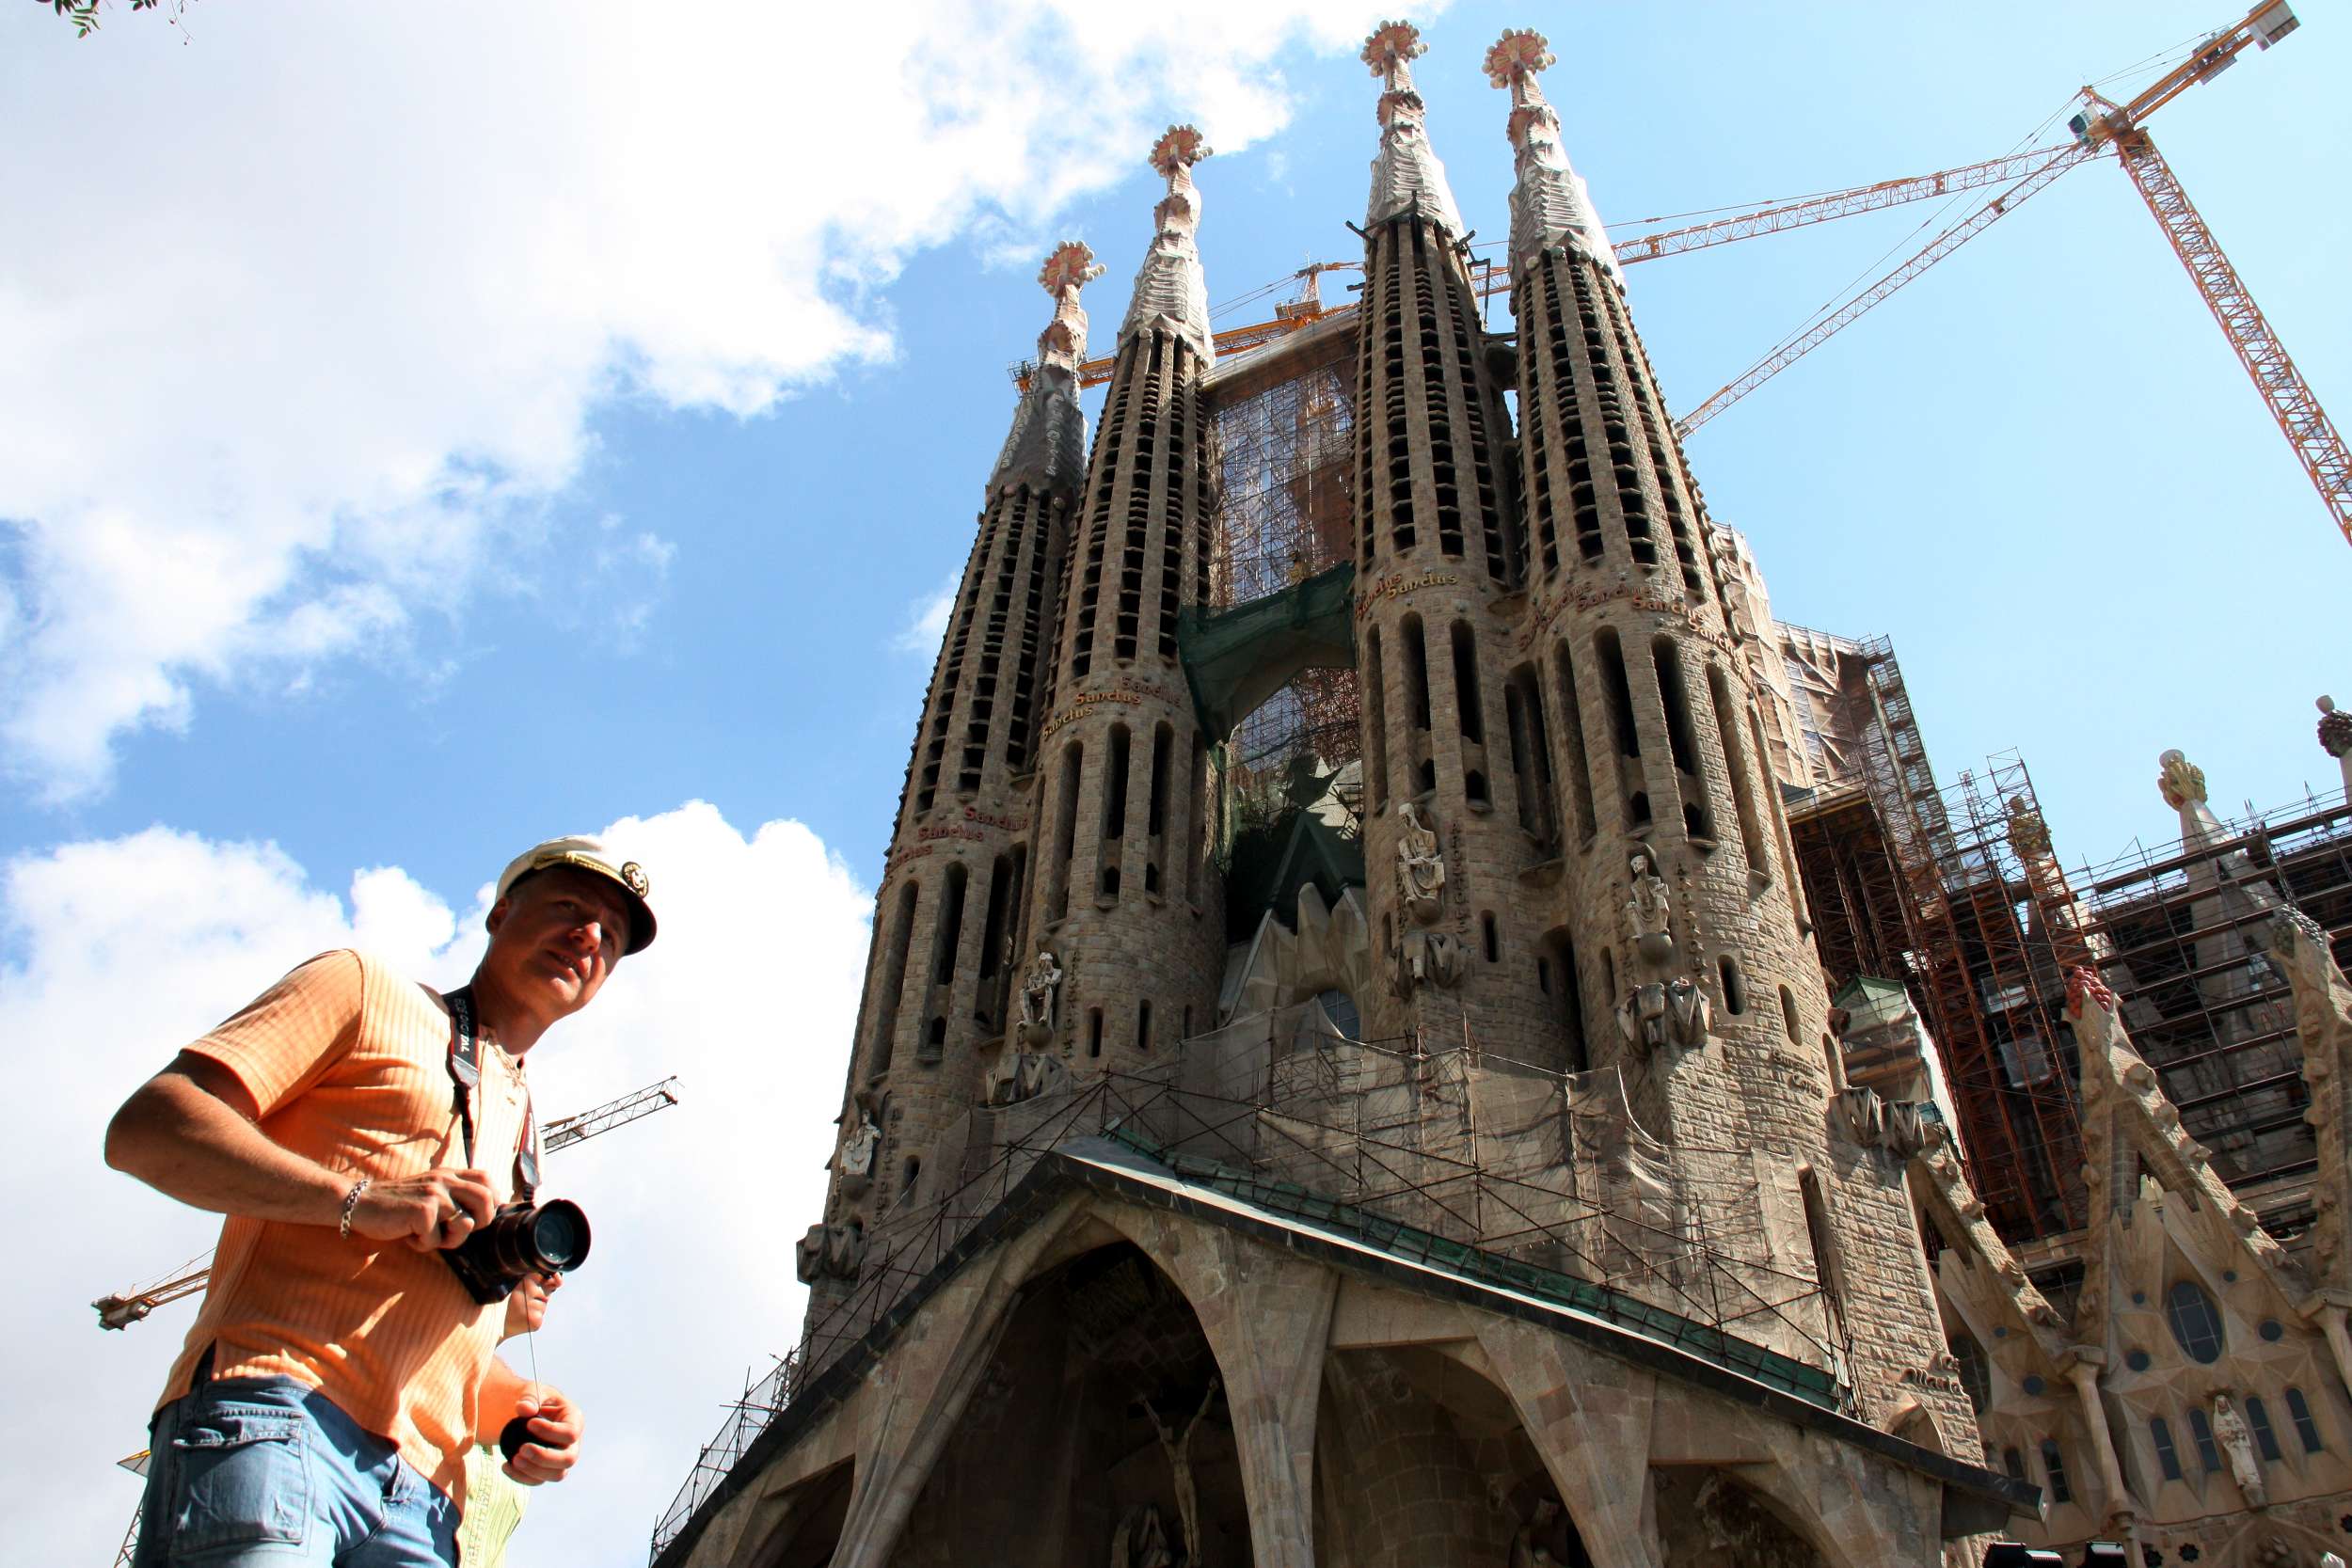 Tourist at Sagrada Familia's entrance (by ACN)